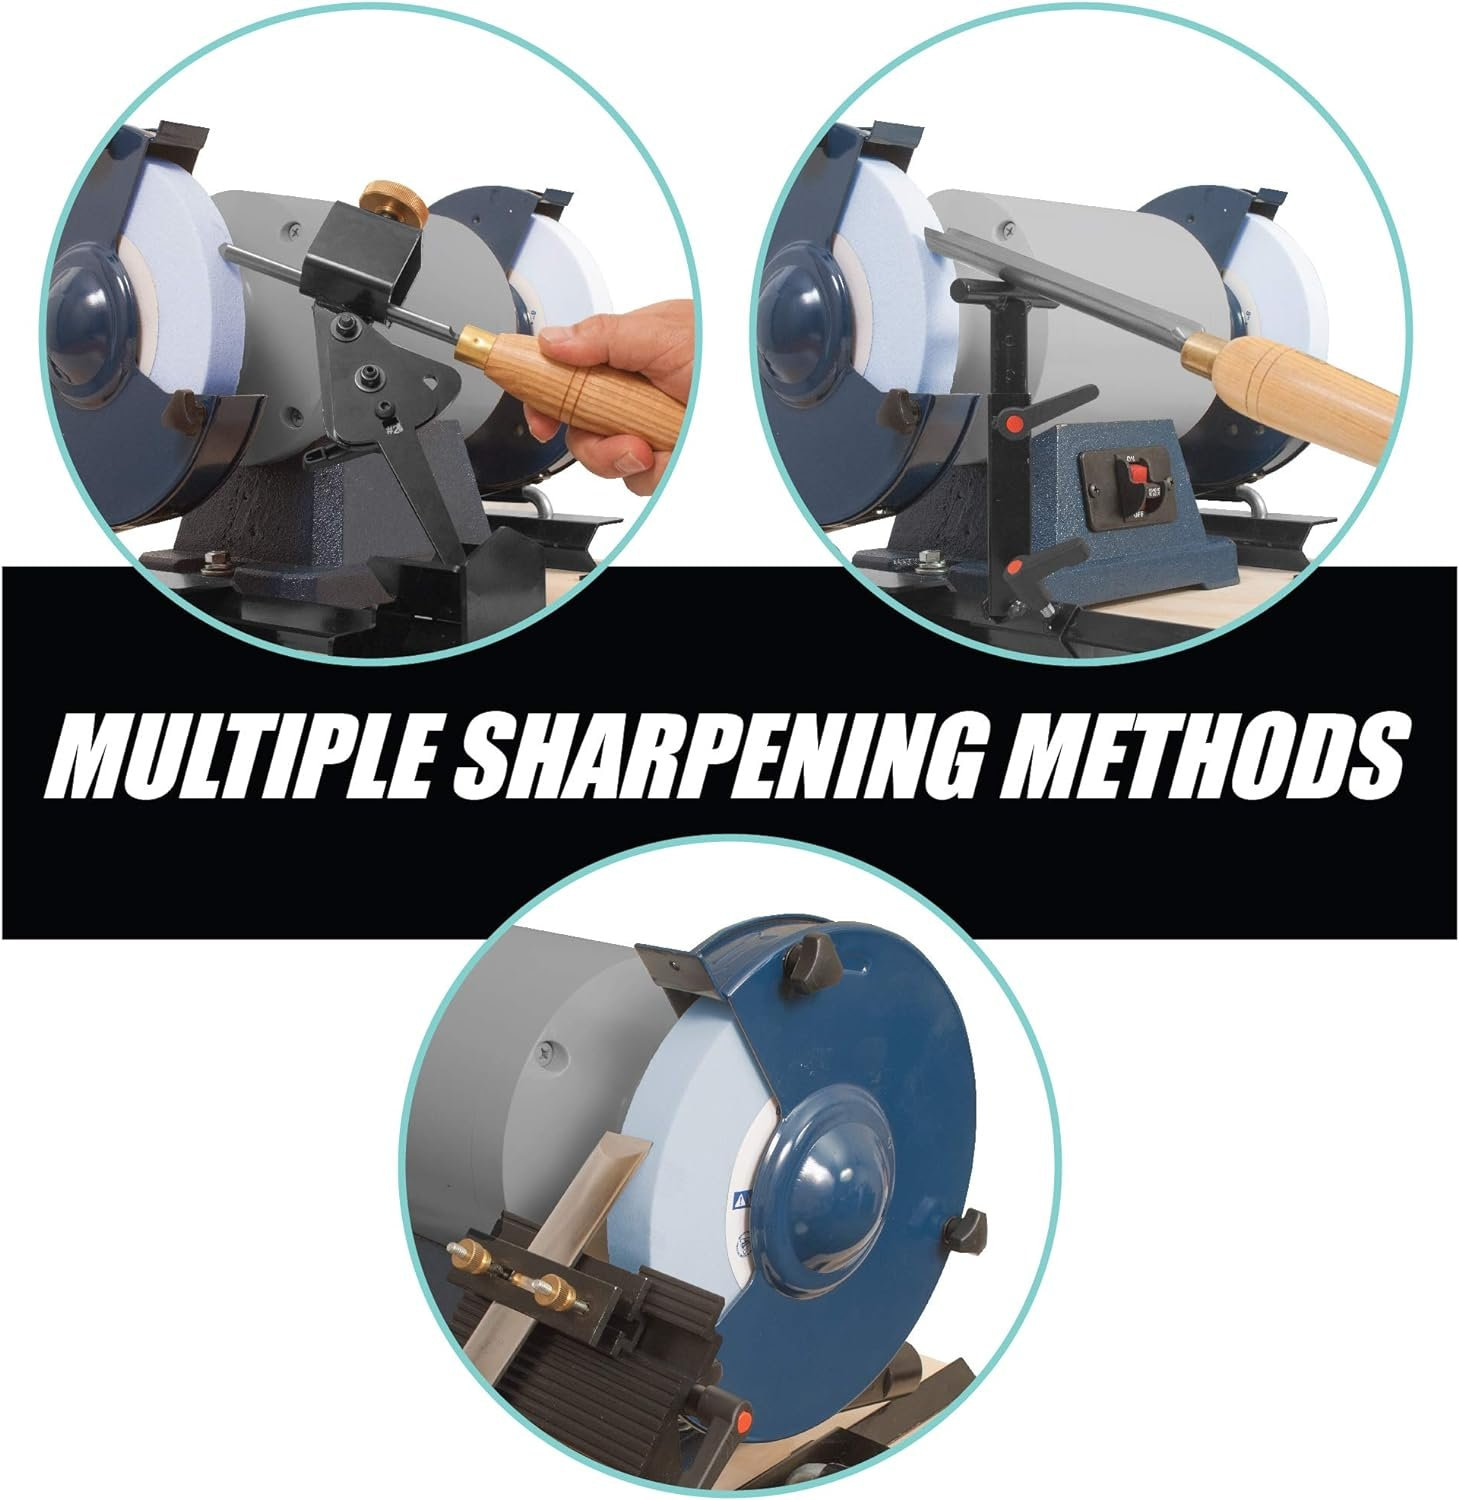 Pro Grind Sharpening System For Lathe Turning Tools, Chisels, Skews, Bowl Spindle Gouges and More. Includes the Multi-Grind Jig, Slotted Platform and Tool Rest